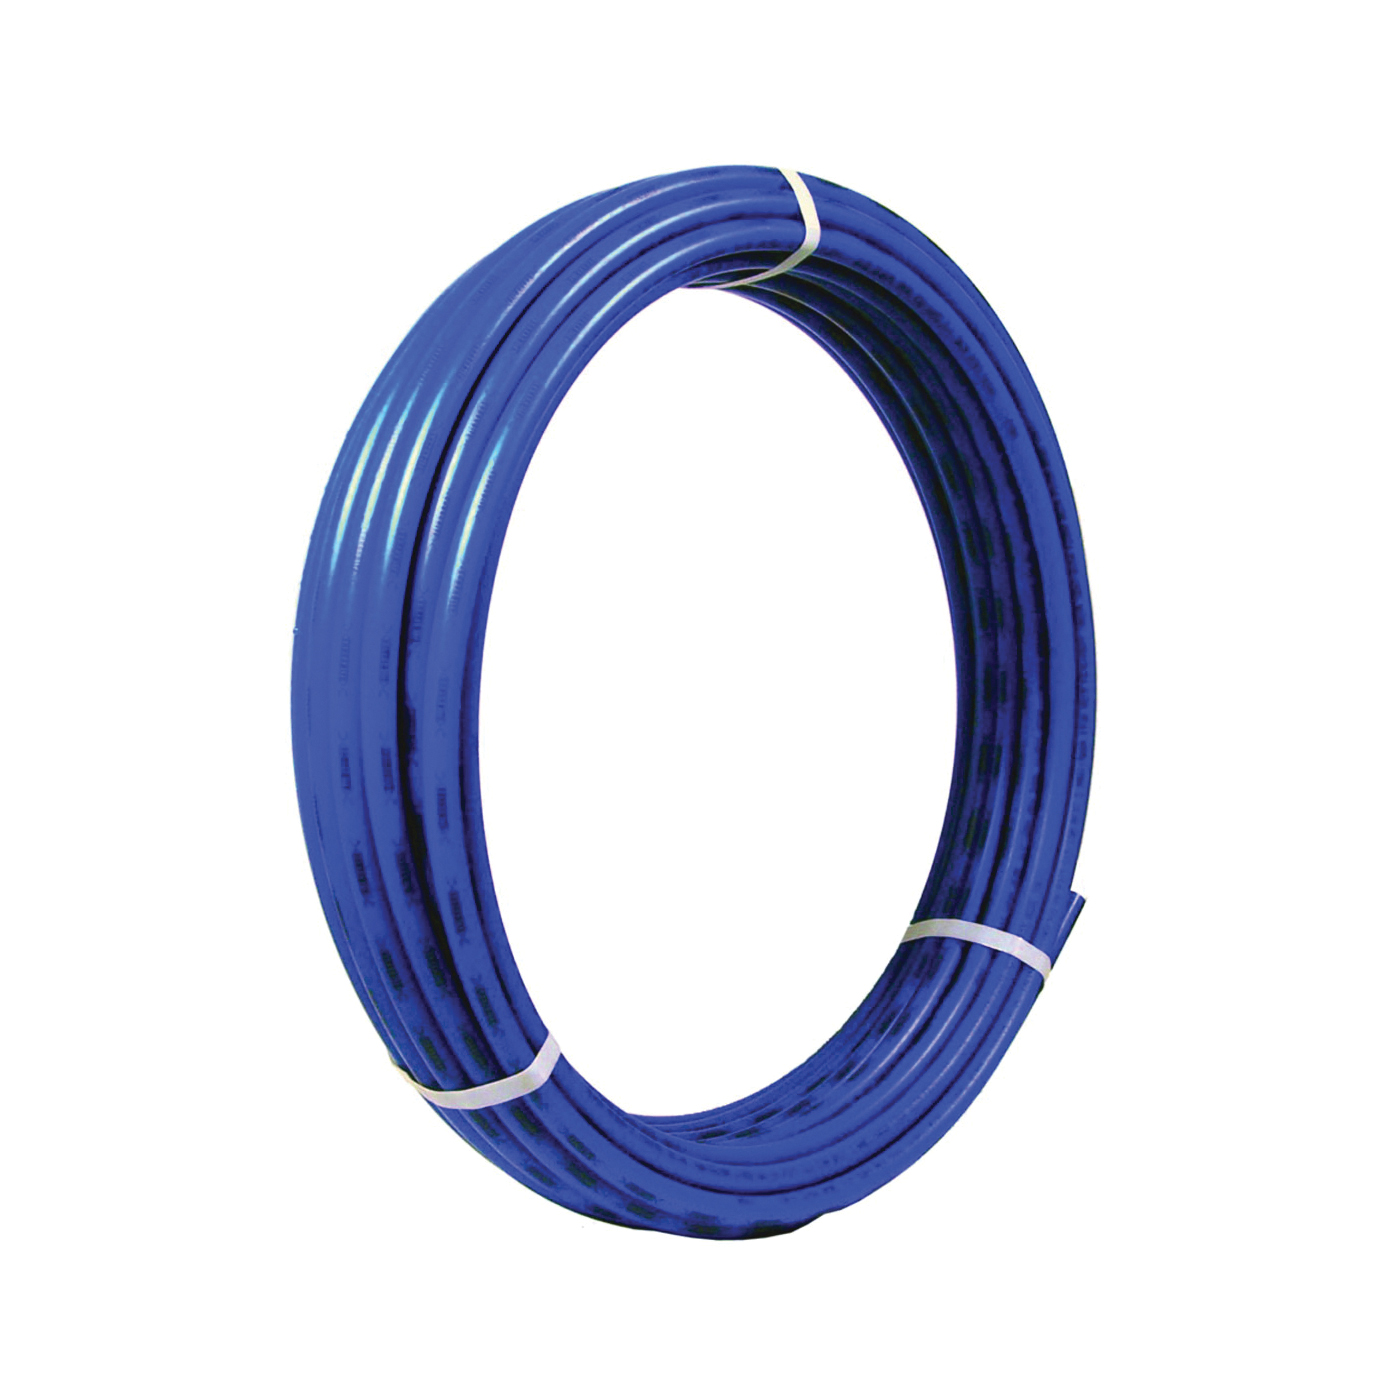 APPB30034 PEX-B Pipe Tubing, 3/4 in, Blue, 300 ft L